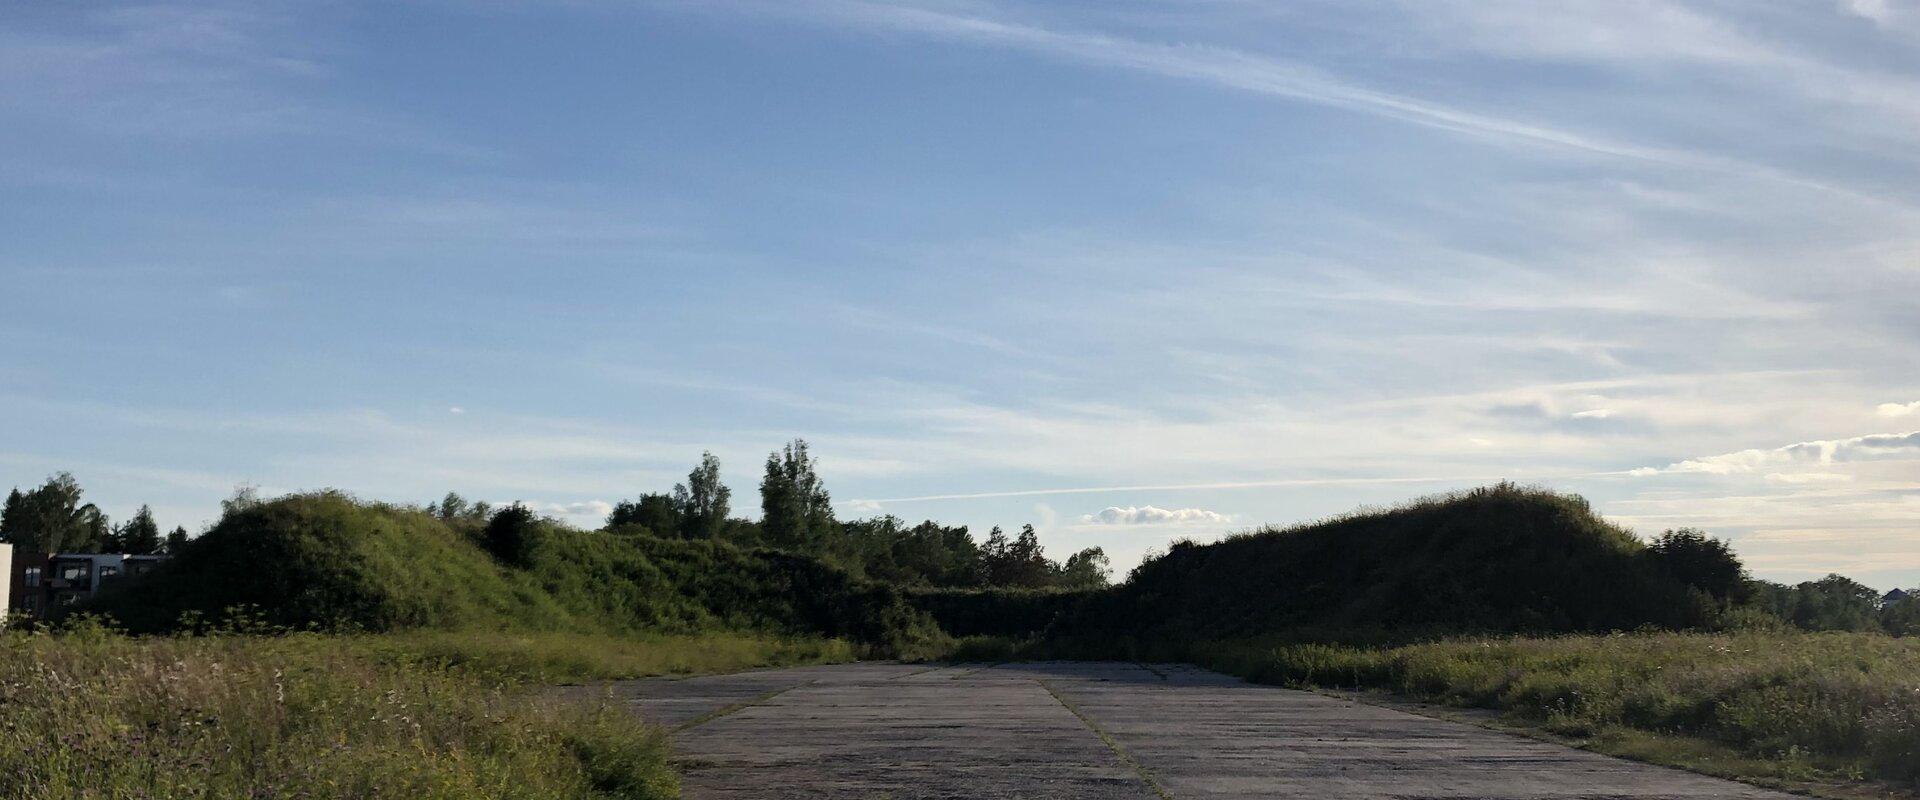 Former Raadi Military Airfield